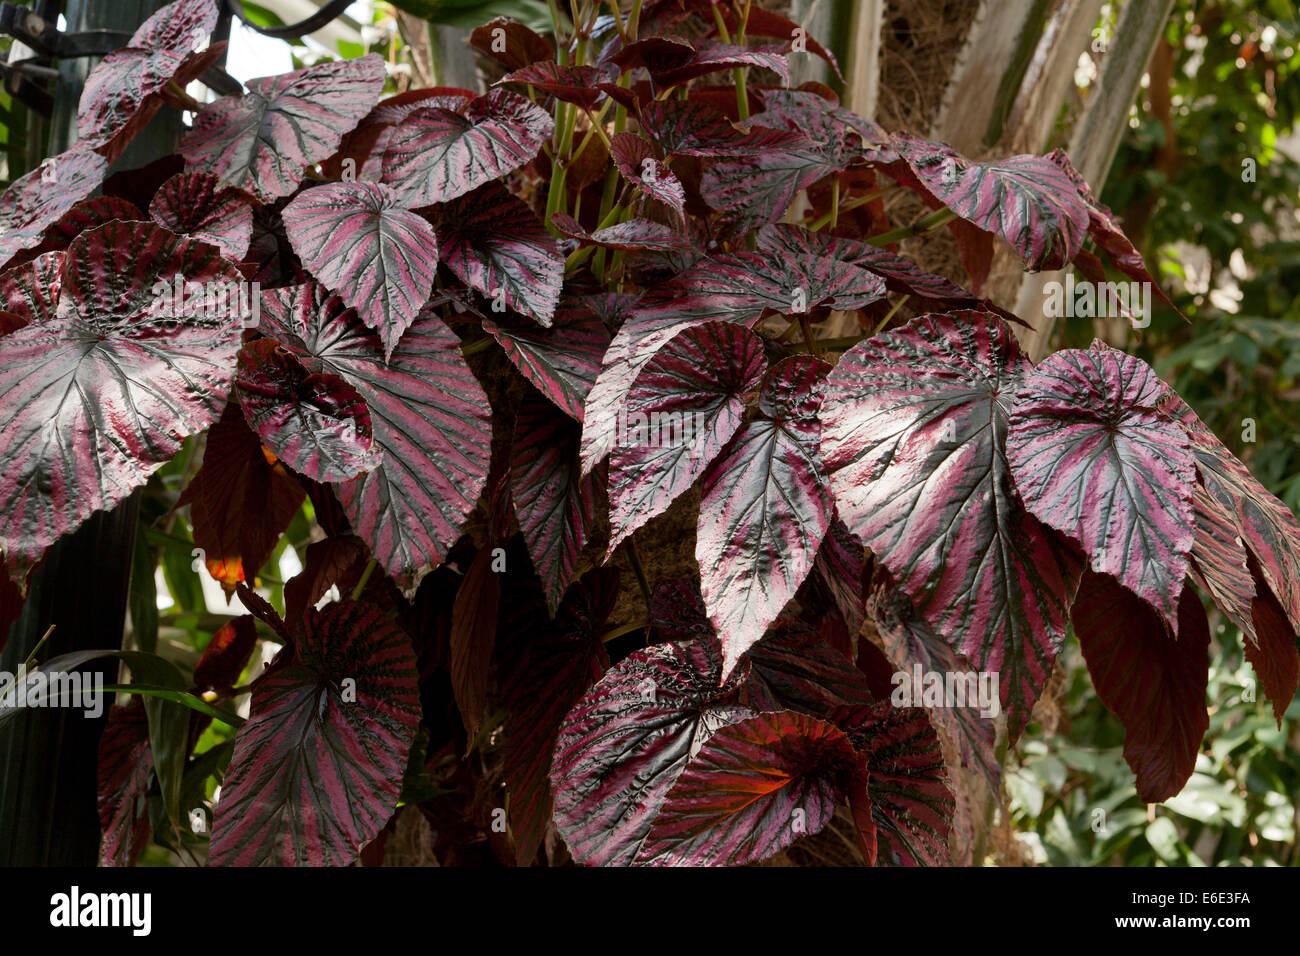 Begonia exotica native to Papua New Guinea Stock Photo - Alamy